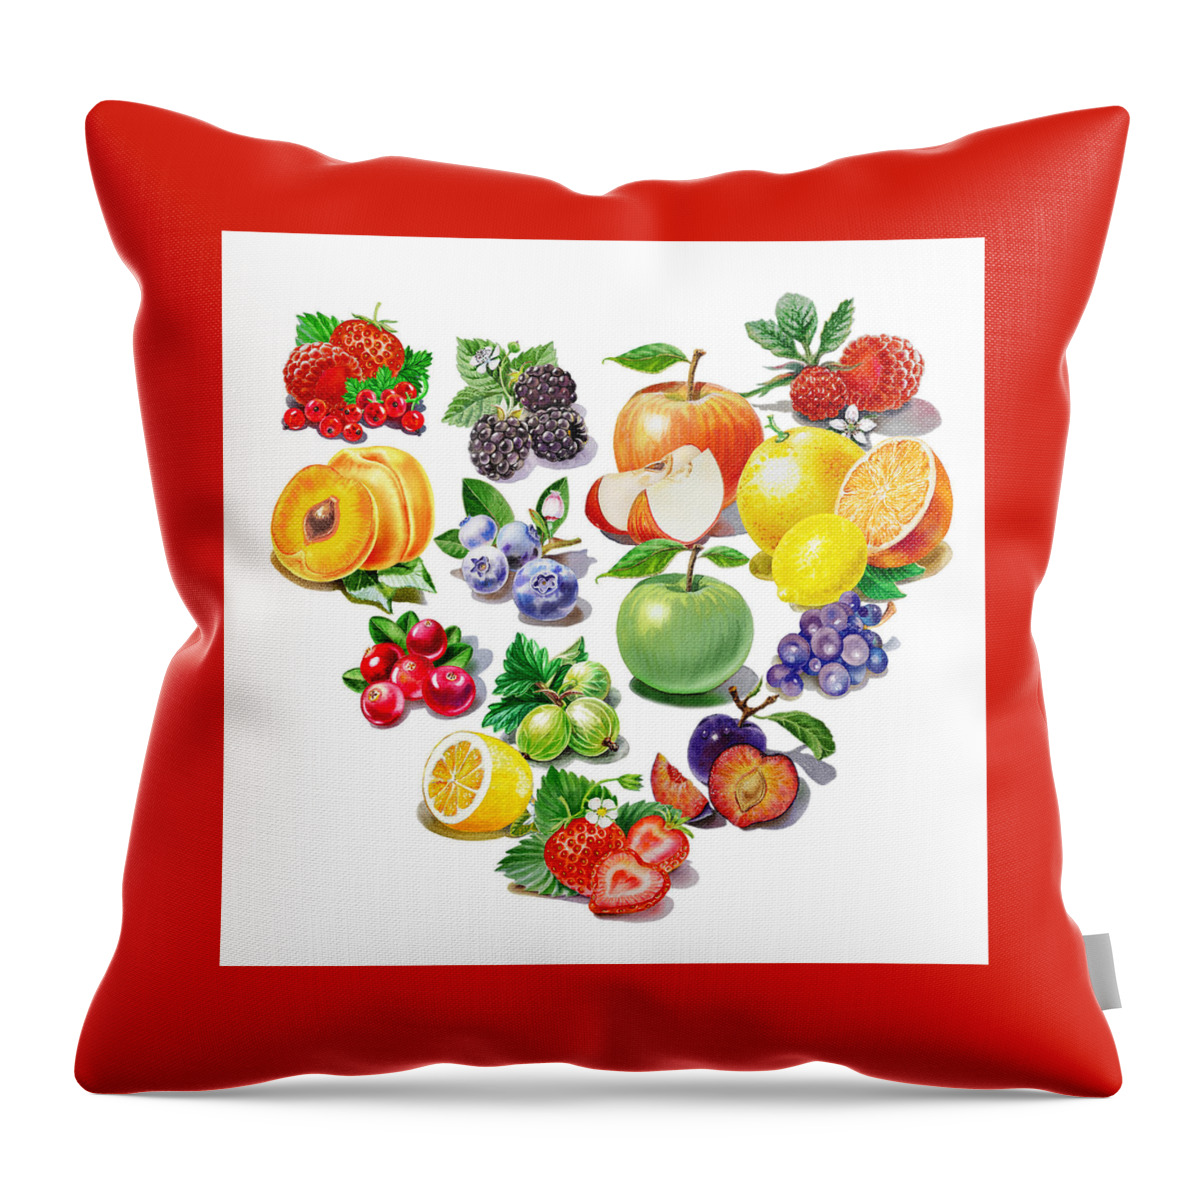 Heart Throw Pillow featuring the painting Love Fruits And Berries by Irina Sztukowski